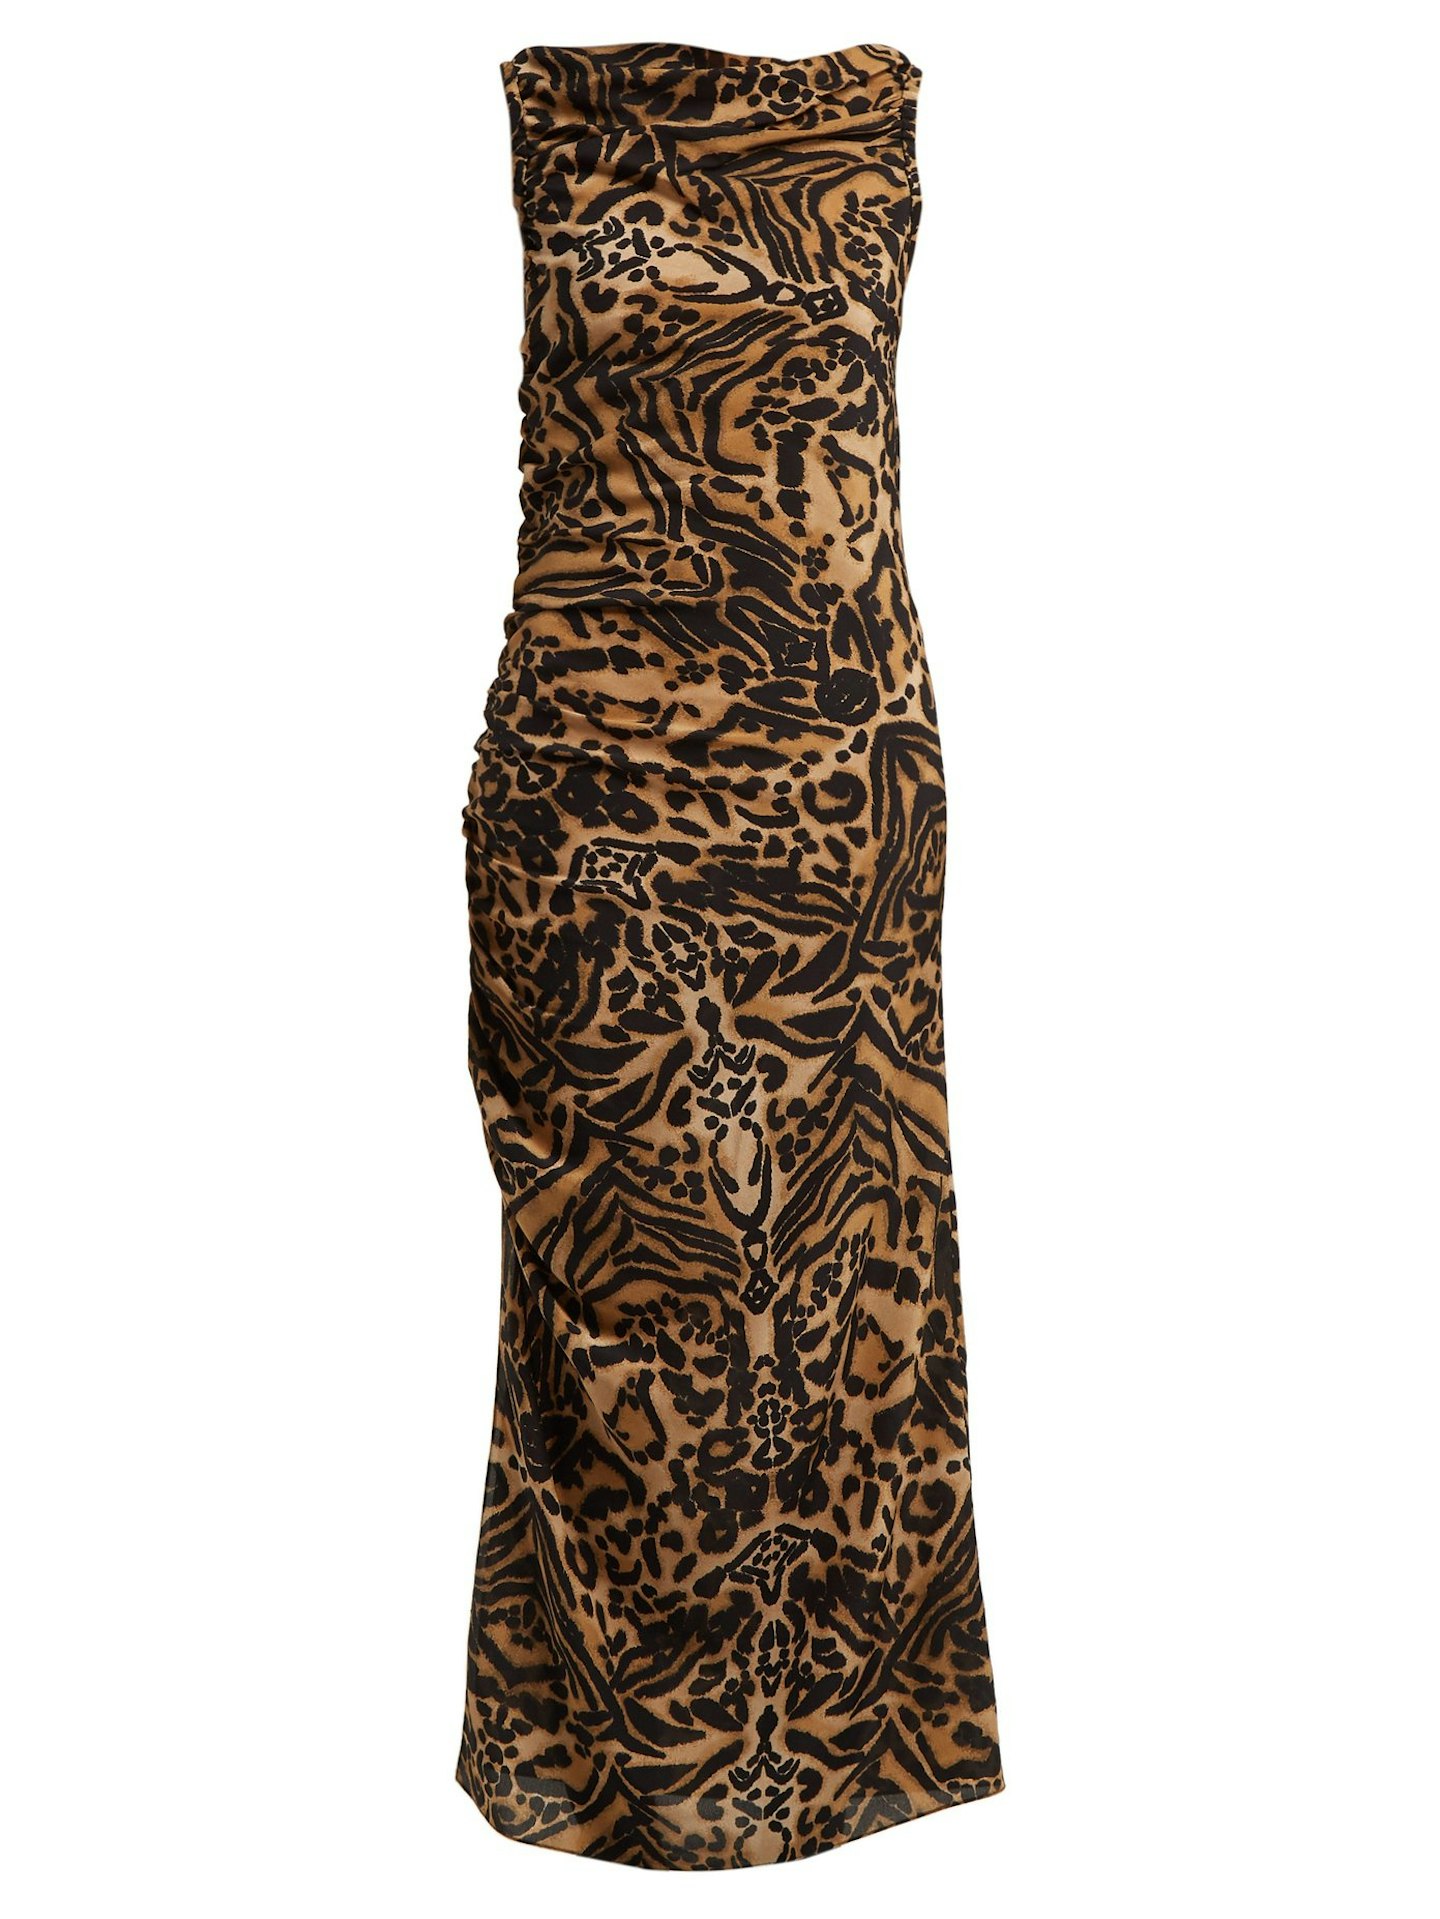 Raey, Gathered Side Backless Tiger-Print Dress, £425, Matchesfashion.com